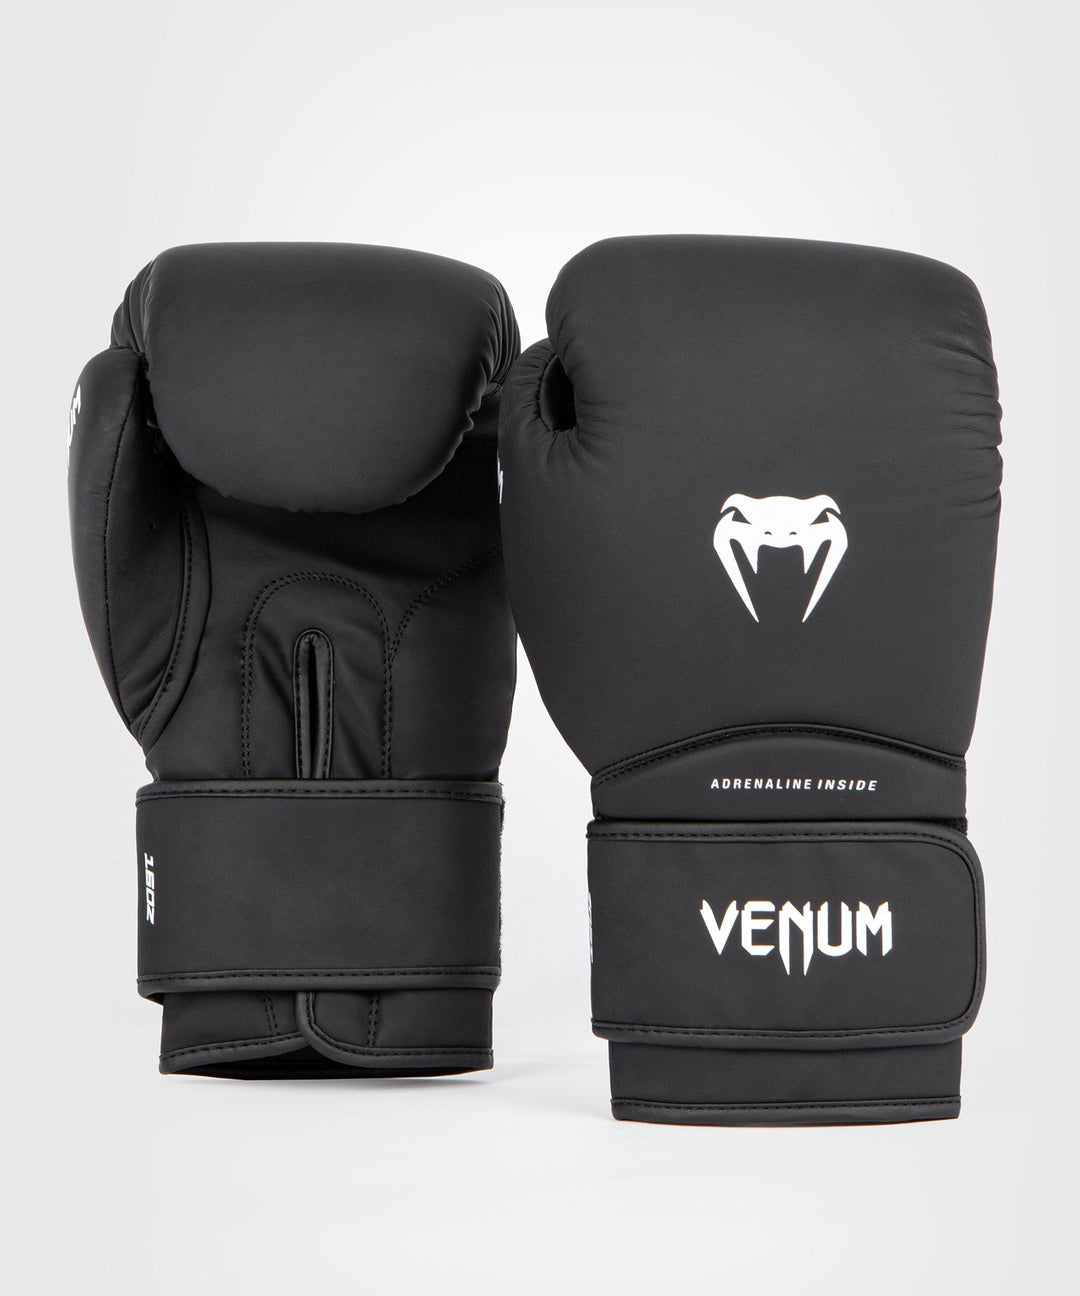 Venum Contender 1.5 Boxing Gloves